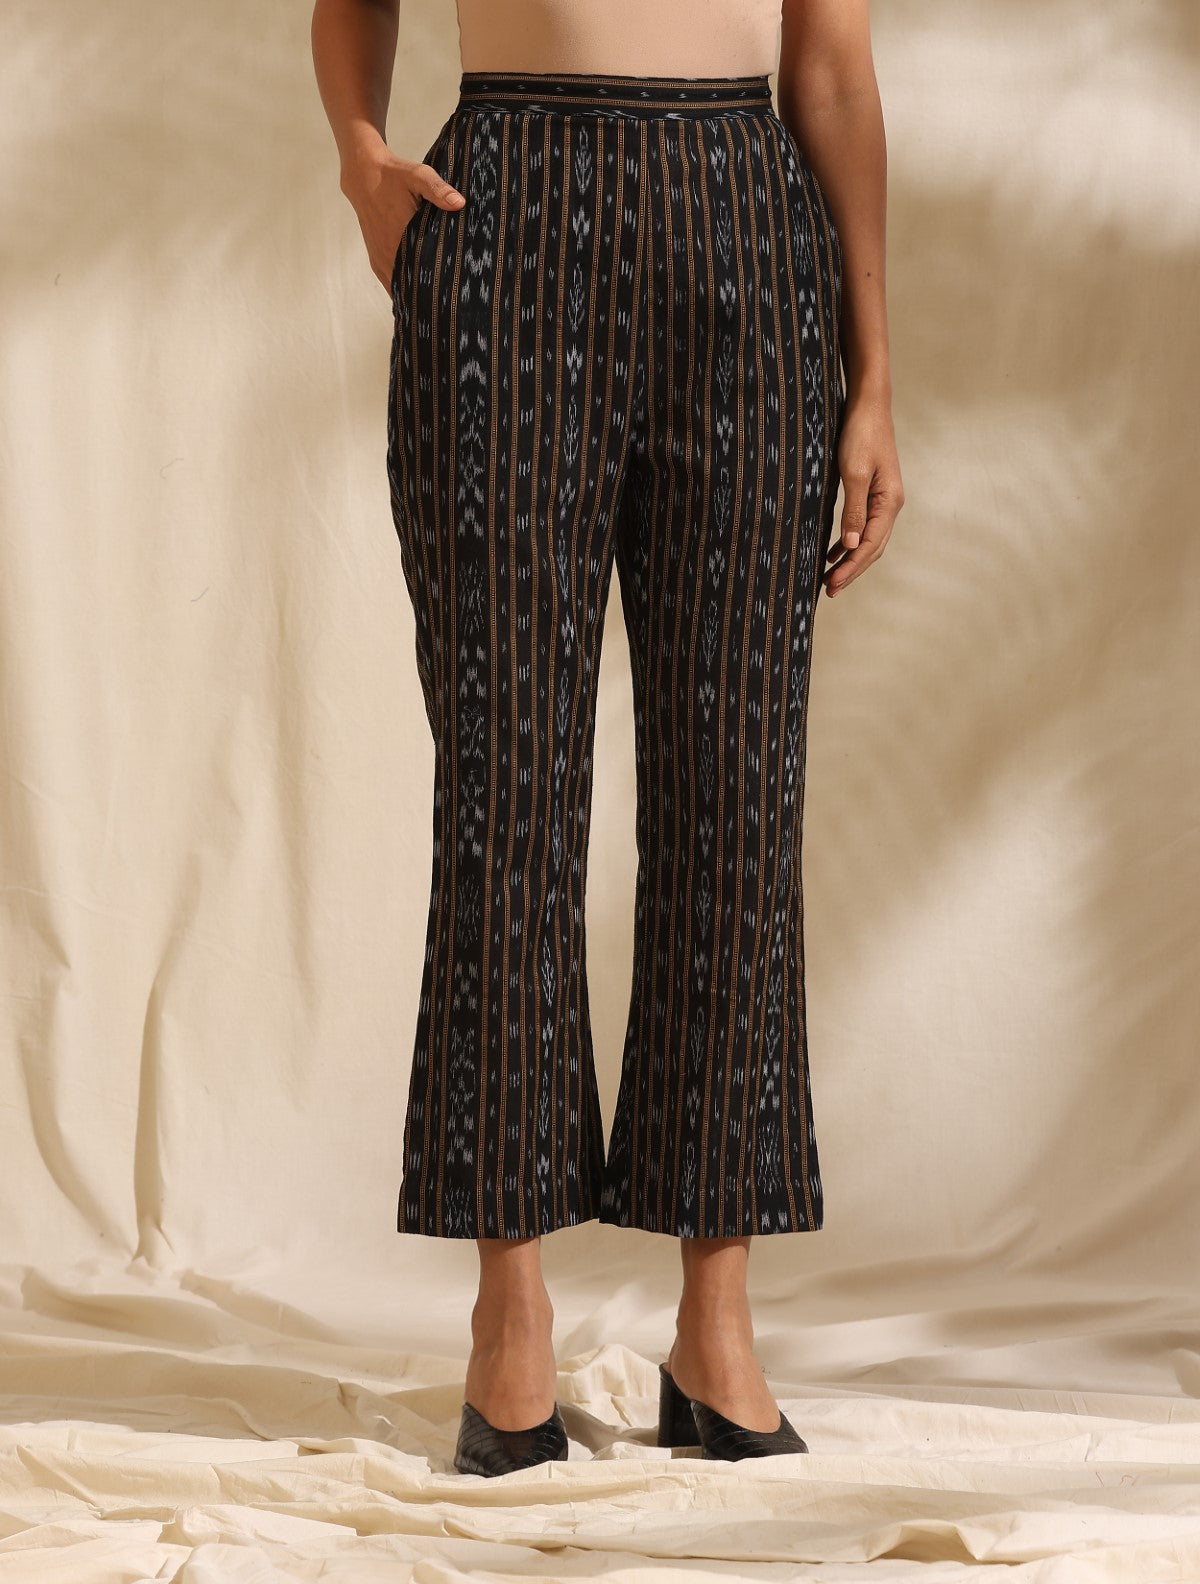 Selene- Black ikat blazer and pant set with mustard shirt- 3 pc set